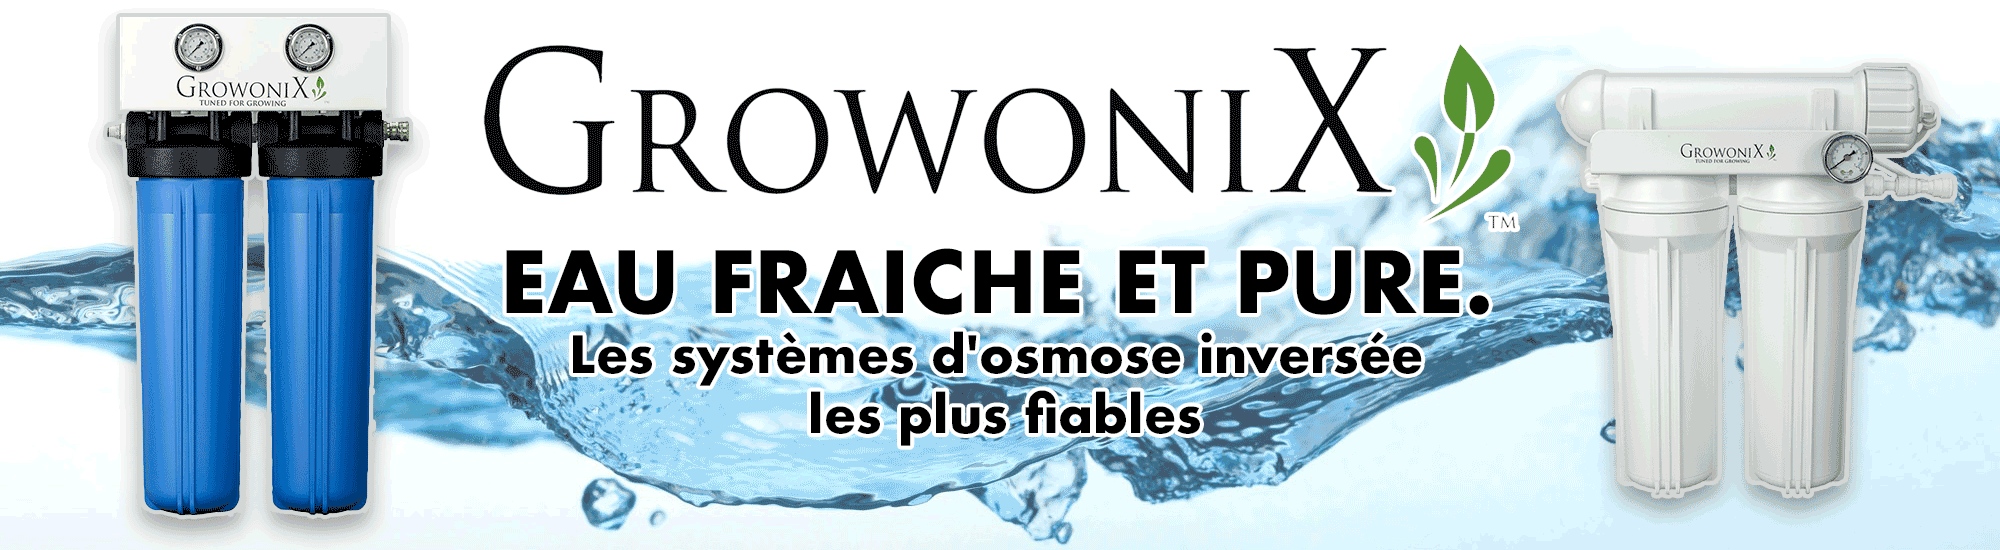 GROWONIX_slide_fr